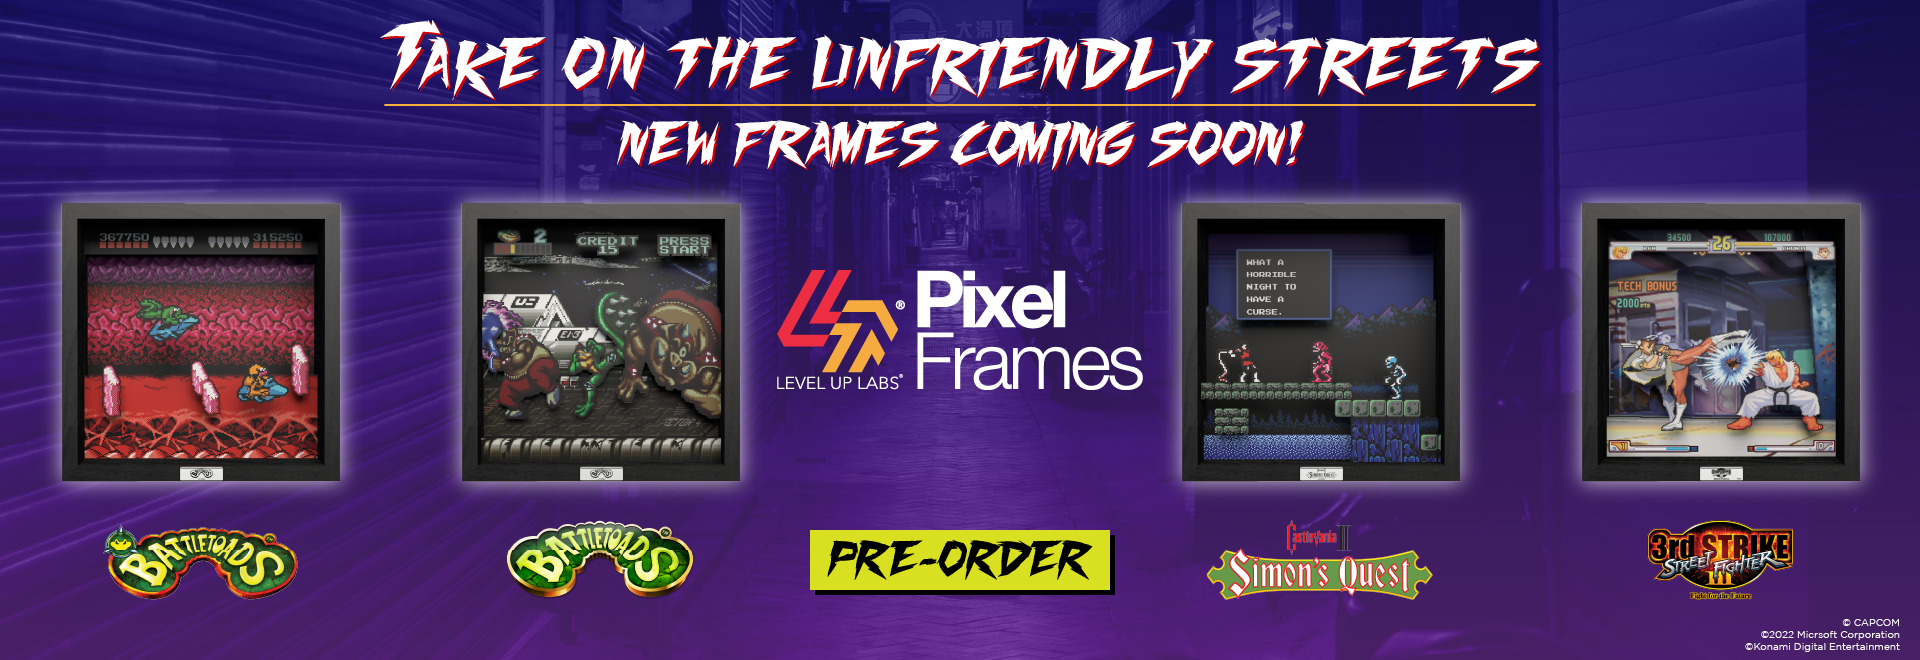 Pixel Frames - Take on the Unfriendly Streets!